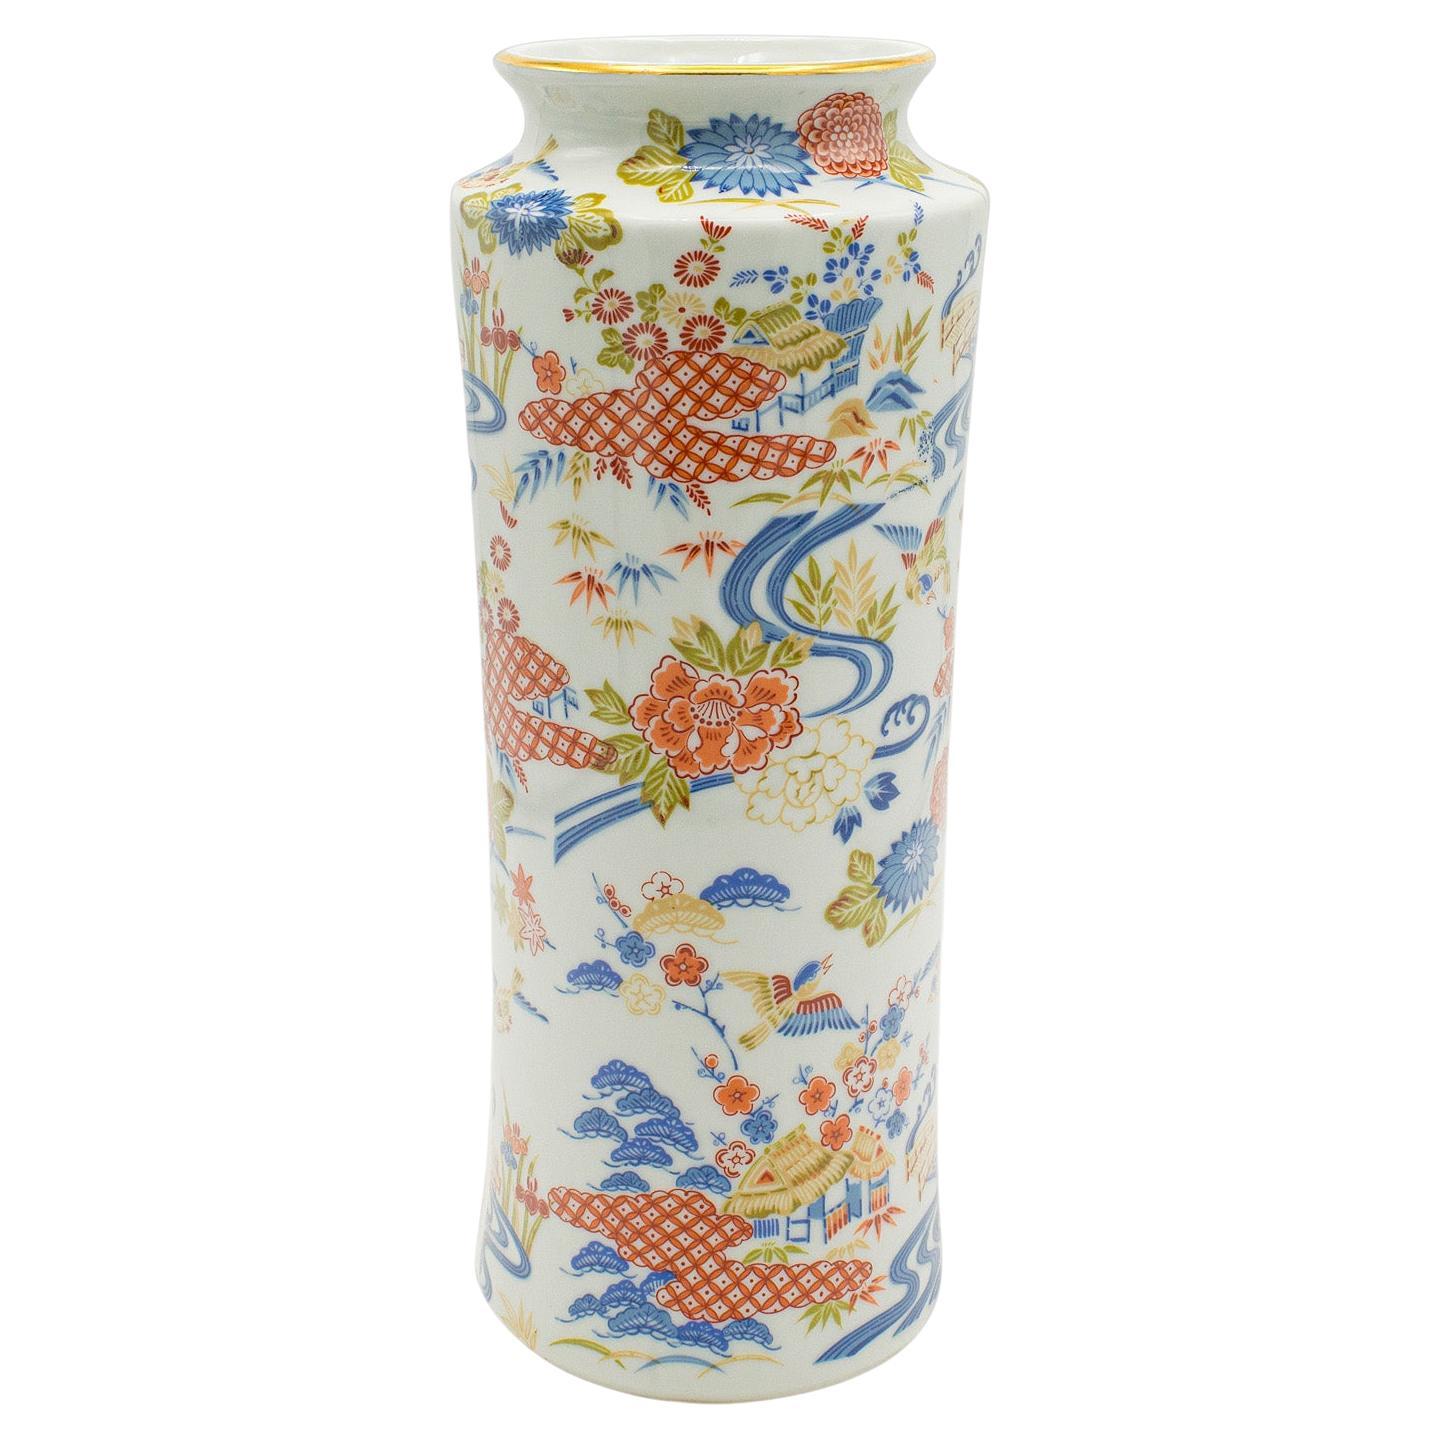 Vintage Decorative Flower Vase, Chinese, Ceramic, Stem Sleeve, Art Deco Revival For Sale